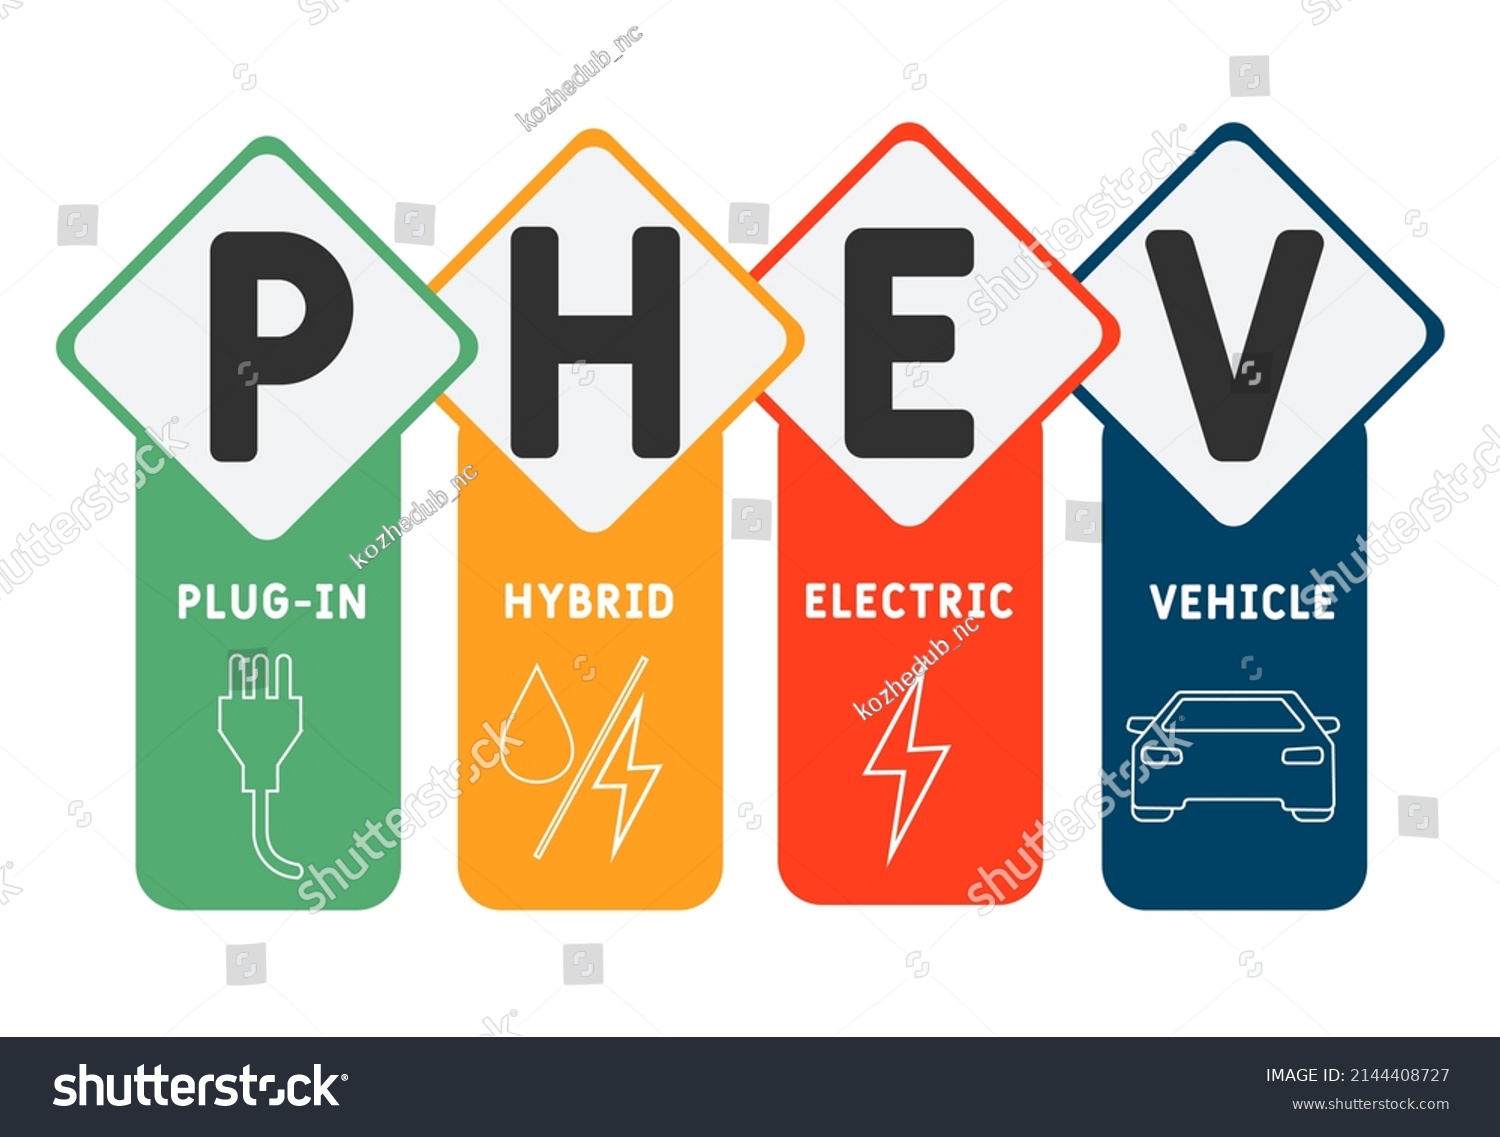 Phev Plugin Hybrid Electric Vehicle Acronym Stock Vector (Royalty Free